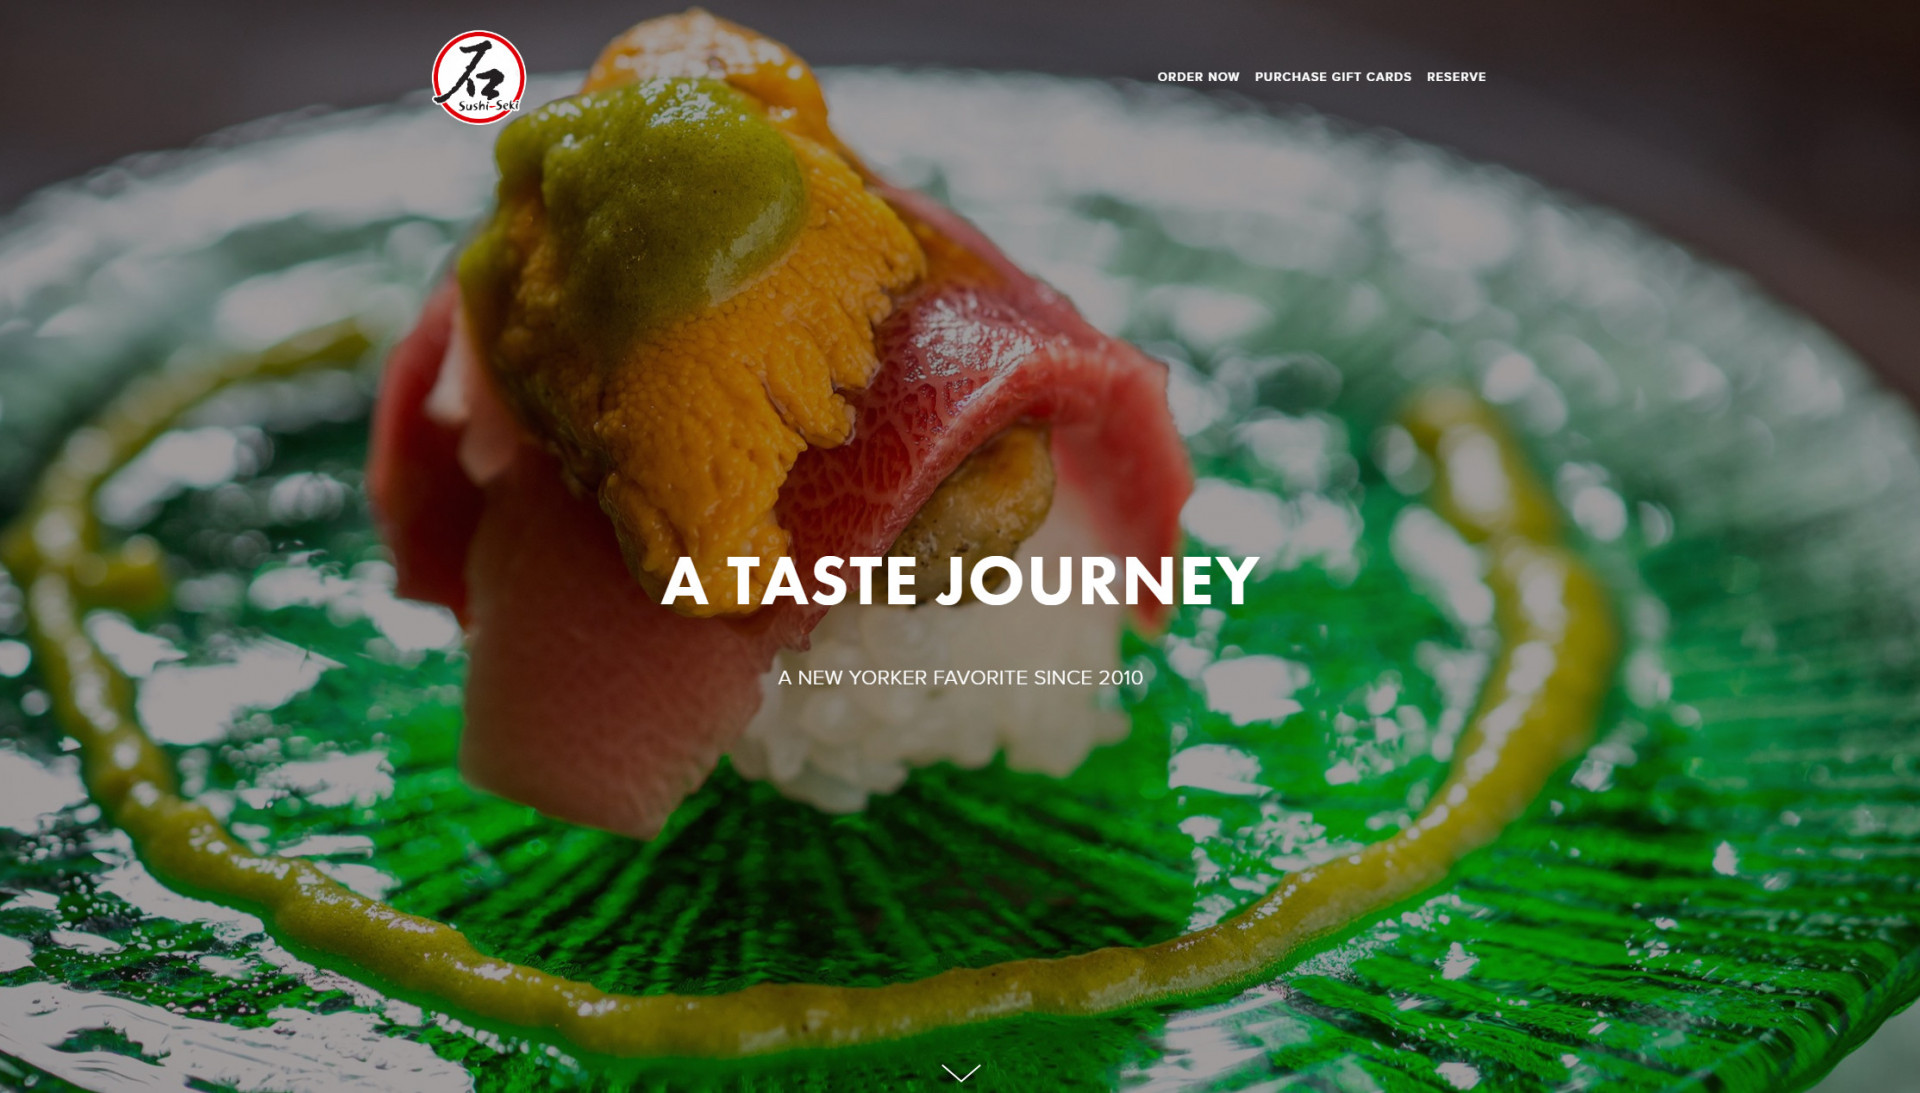 A restaurant website design inspiration for sushi restaurants